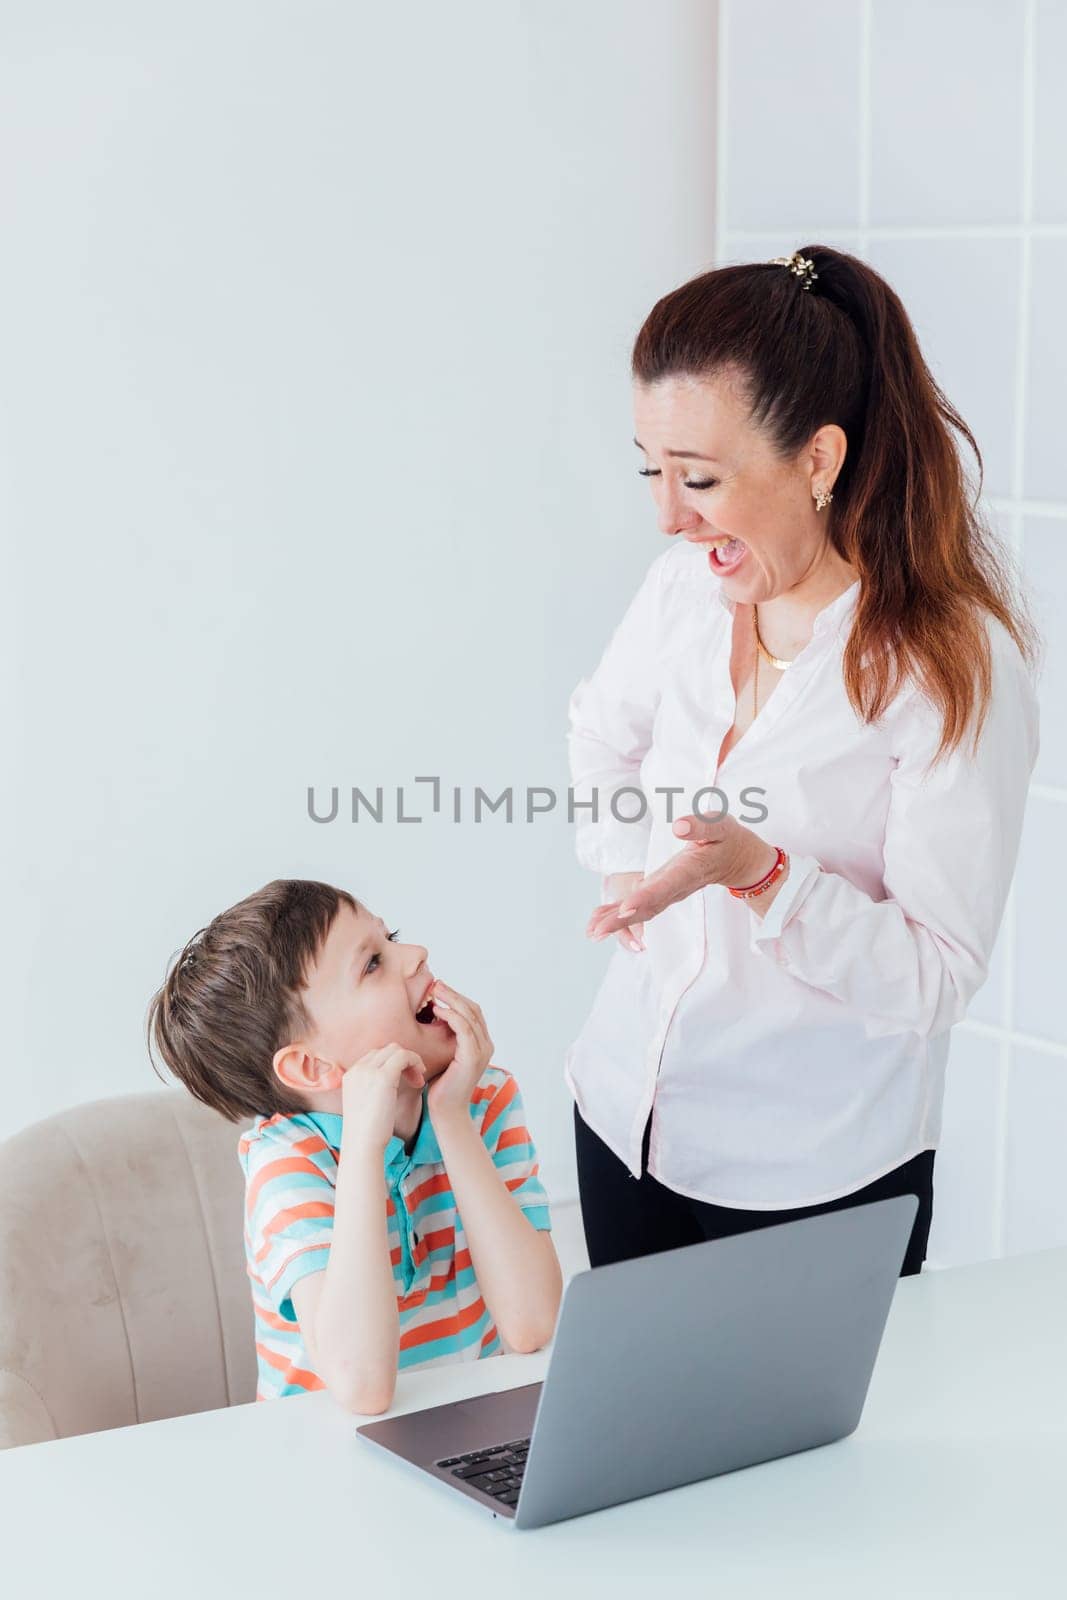 Woman talking to boy at table laptop